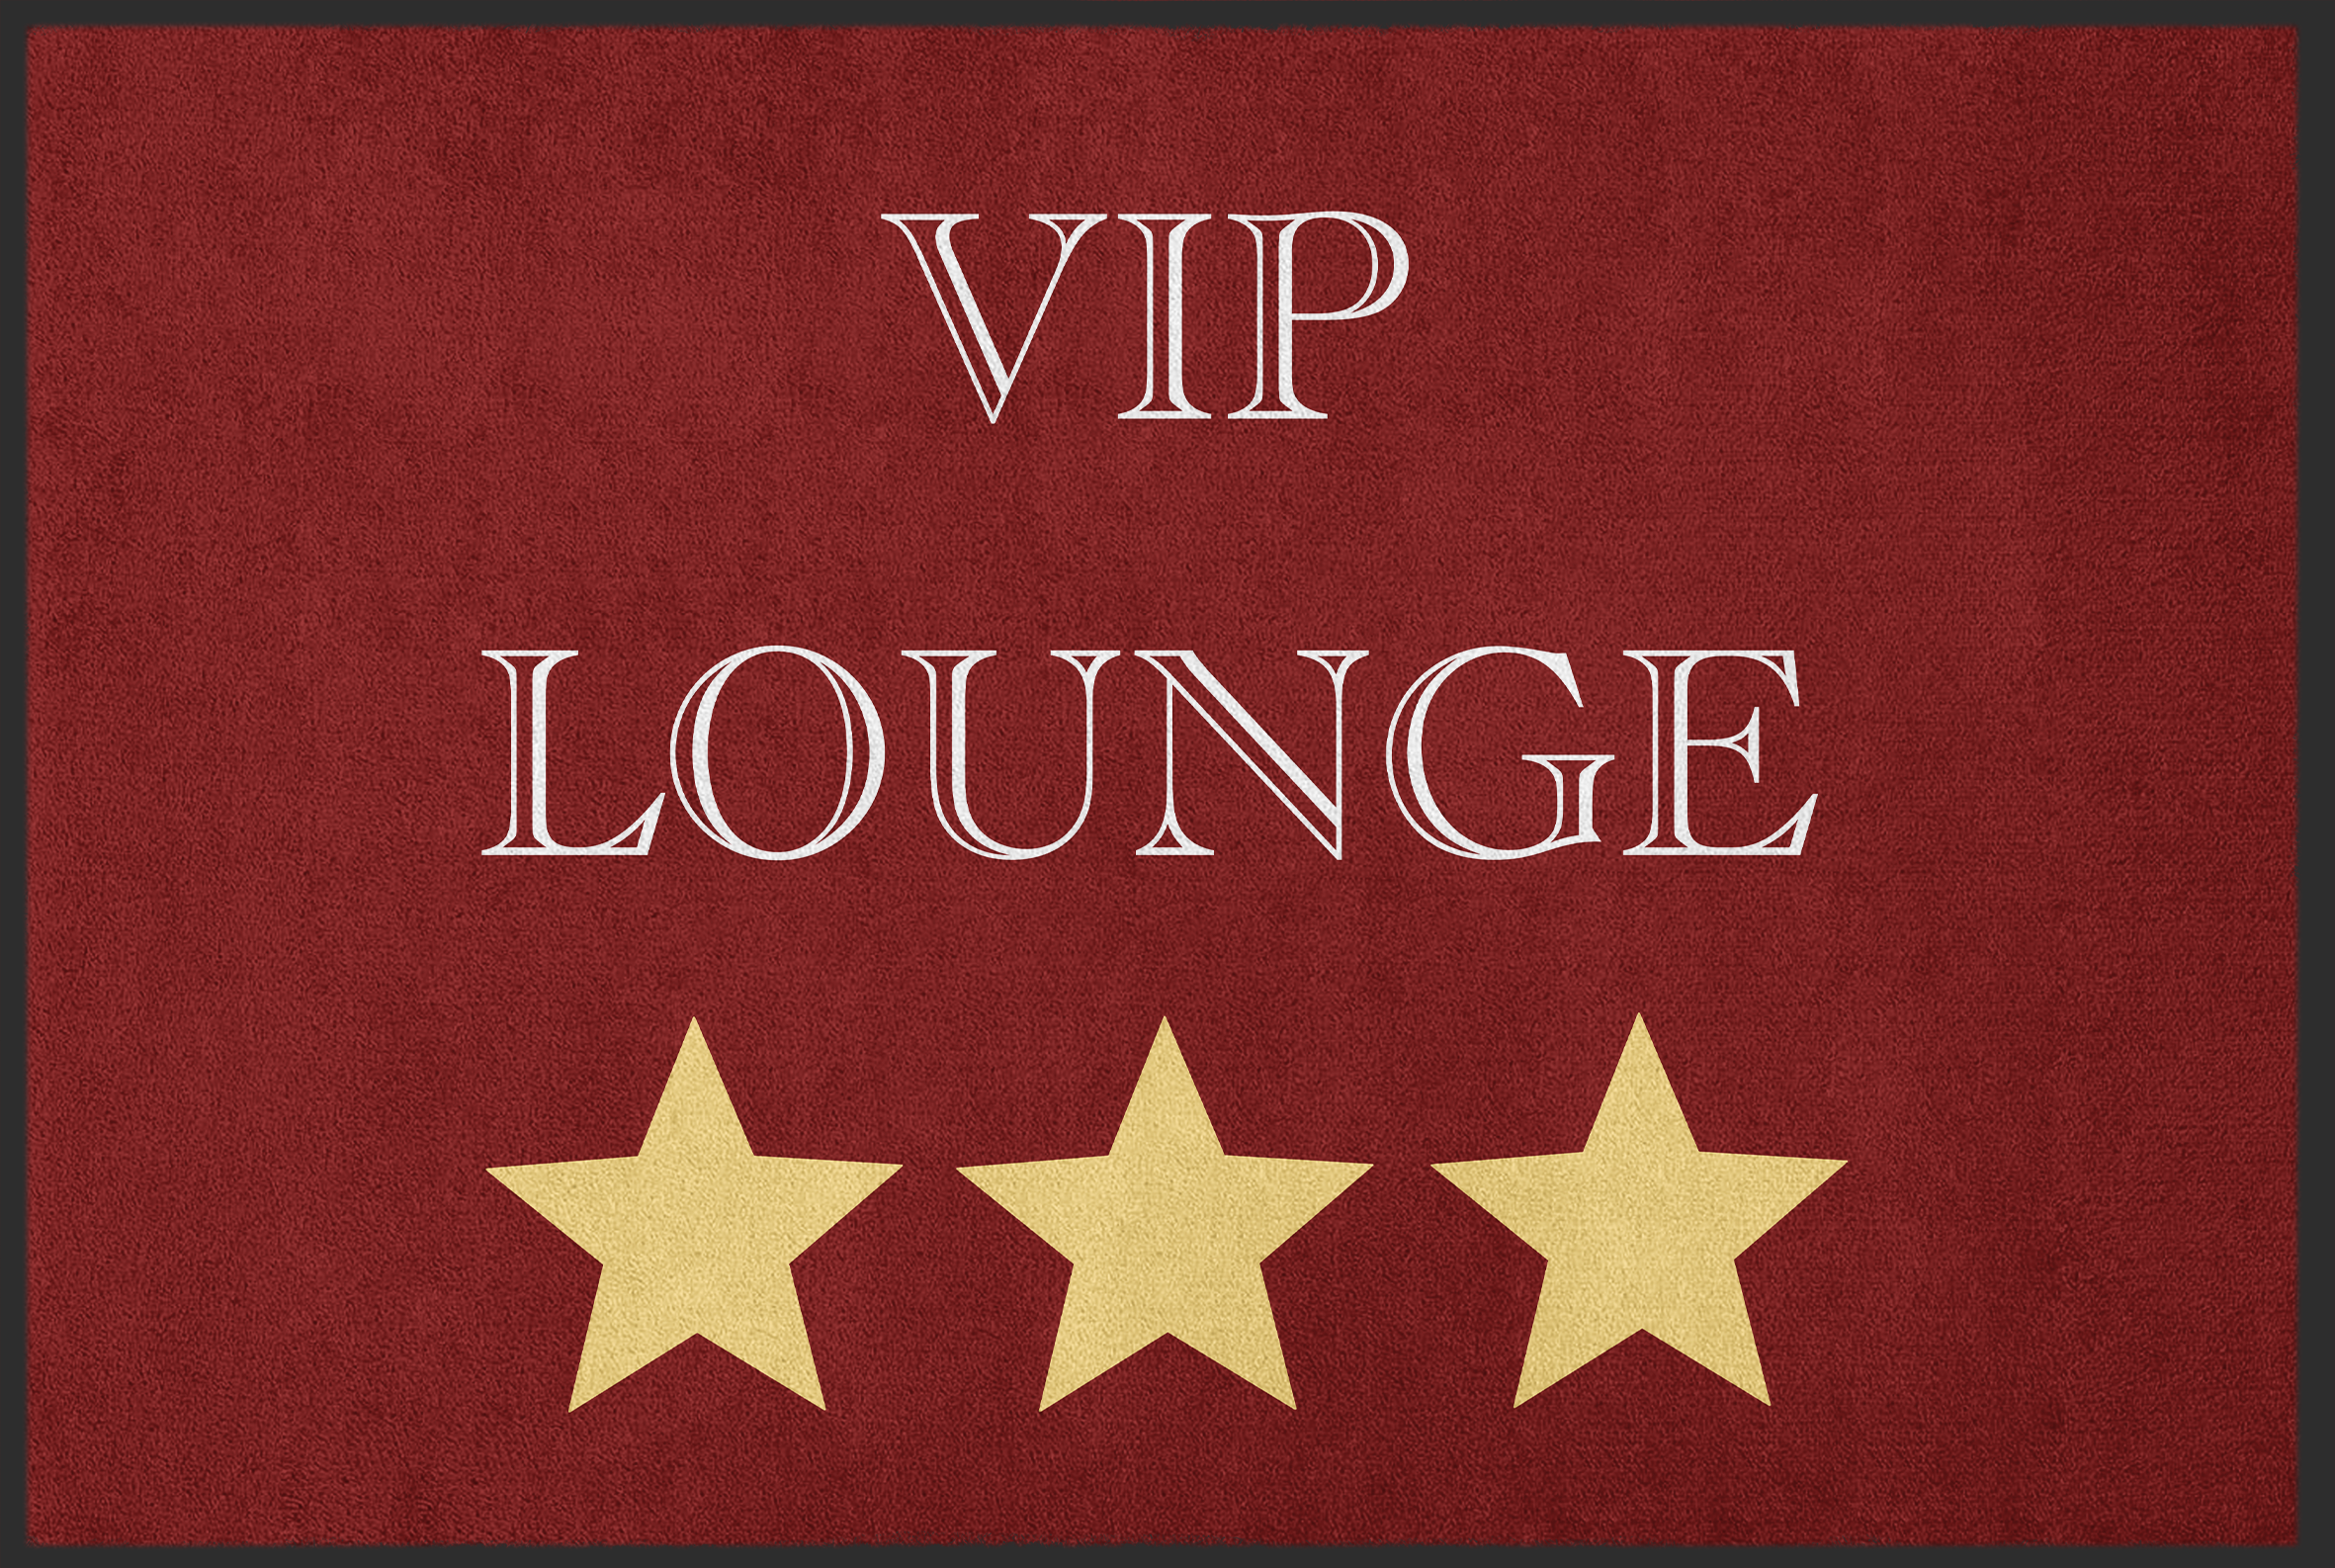 Fussmatte VIP Lounge 10635